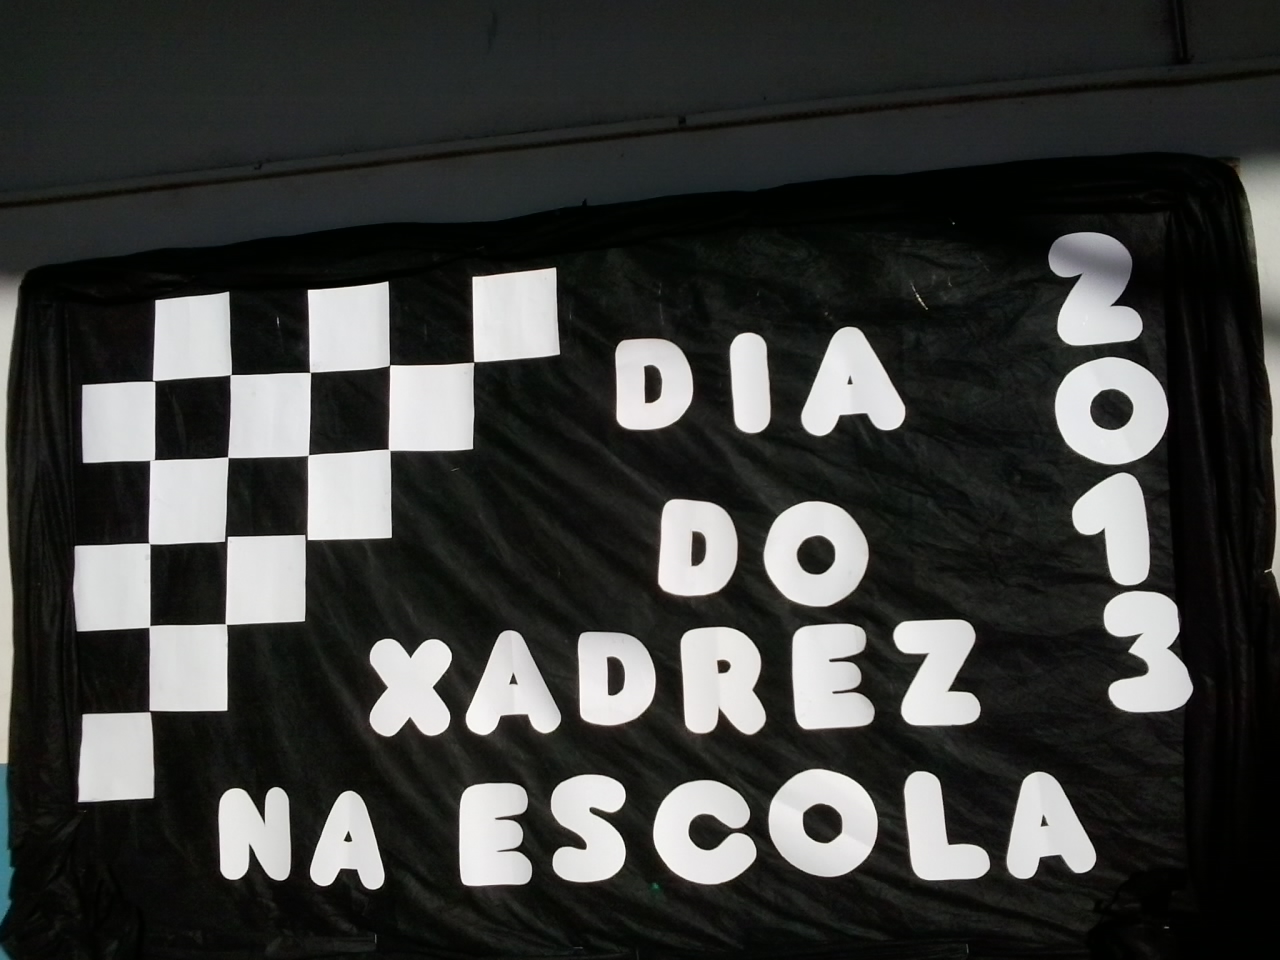 Clube de Xadrez Marabá: XADREZ ESCOLAR, PROFISSIONAL E XADREZ DE